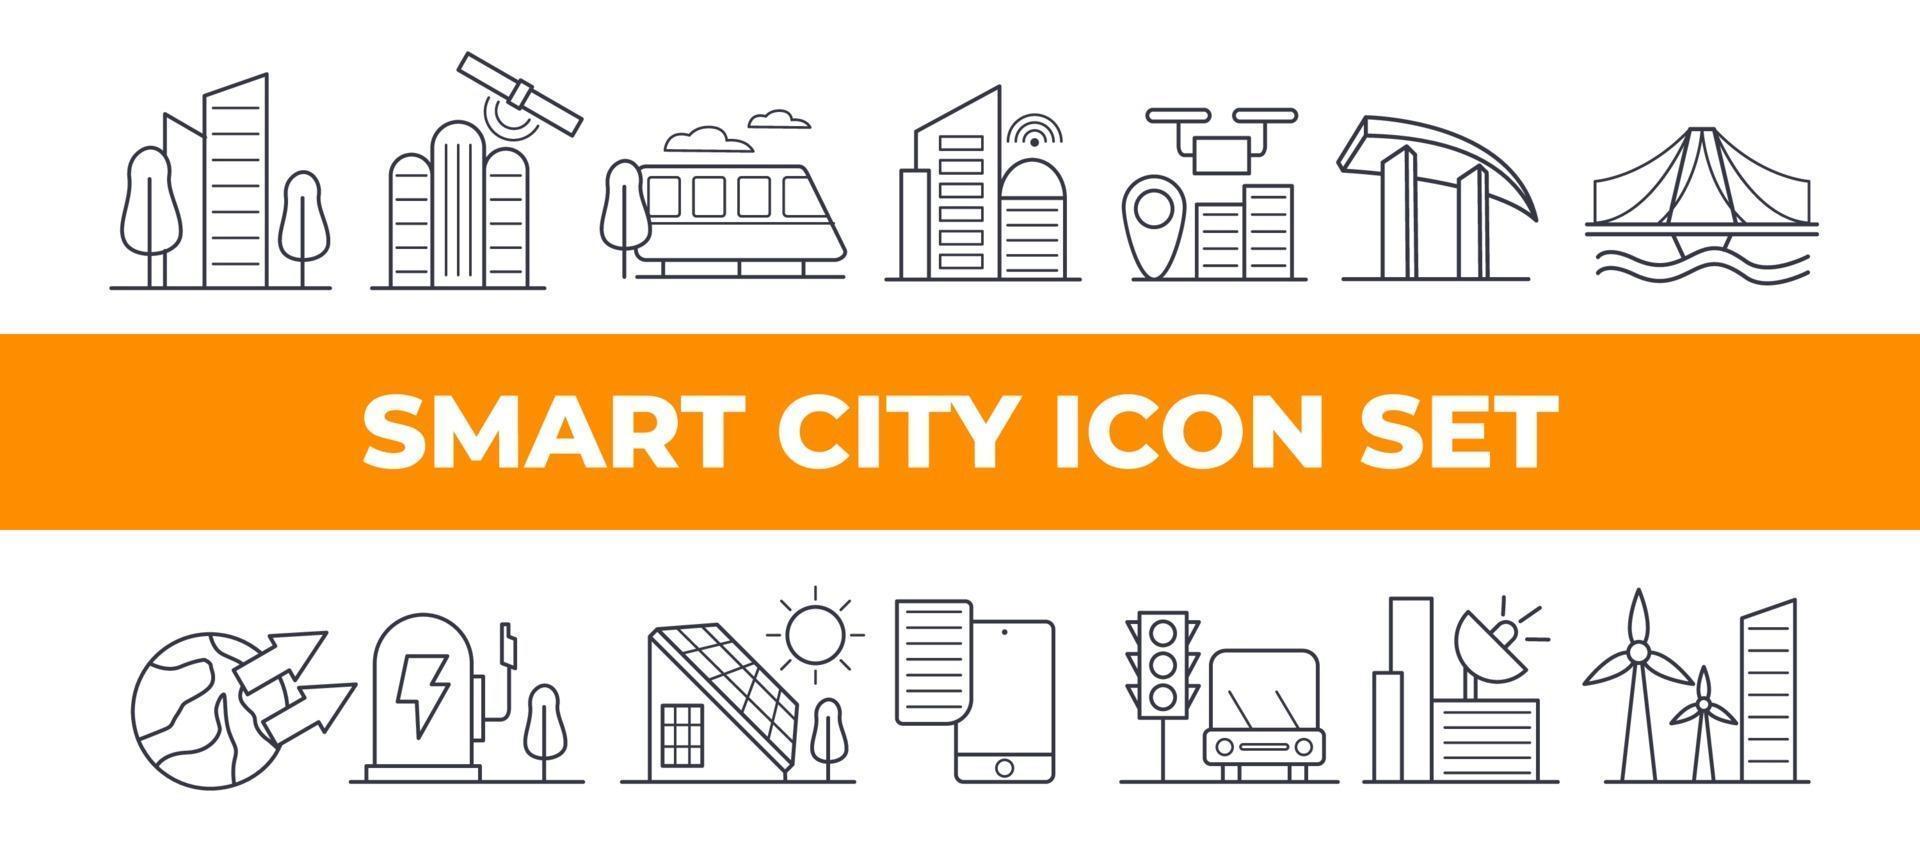 Smart City Icon Set vector